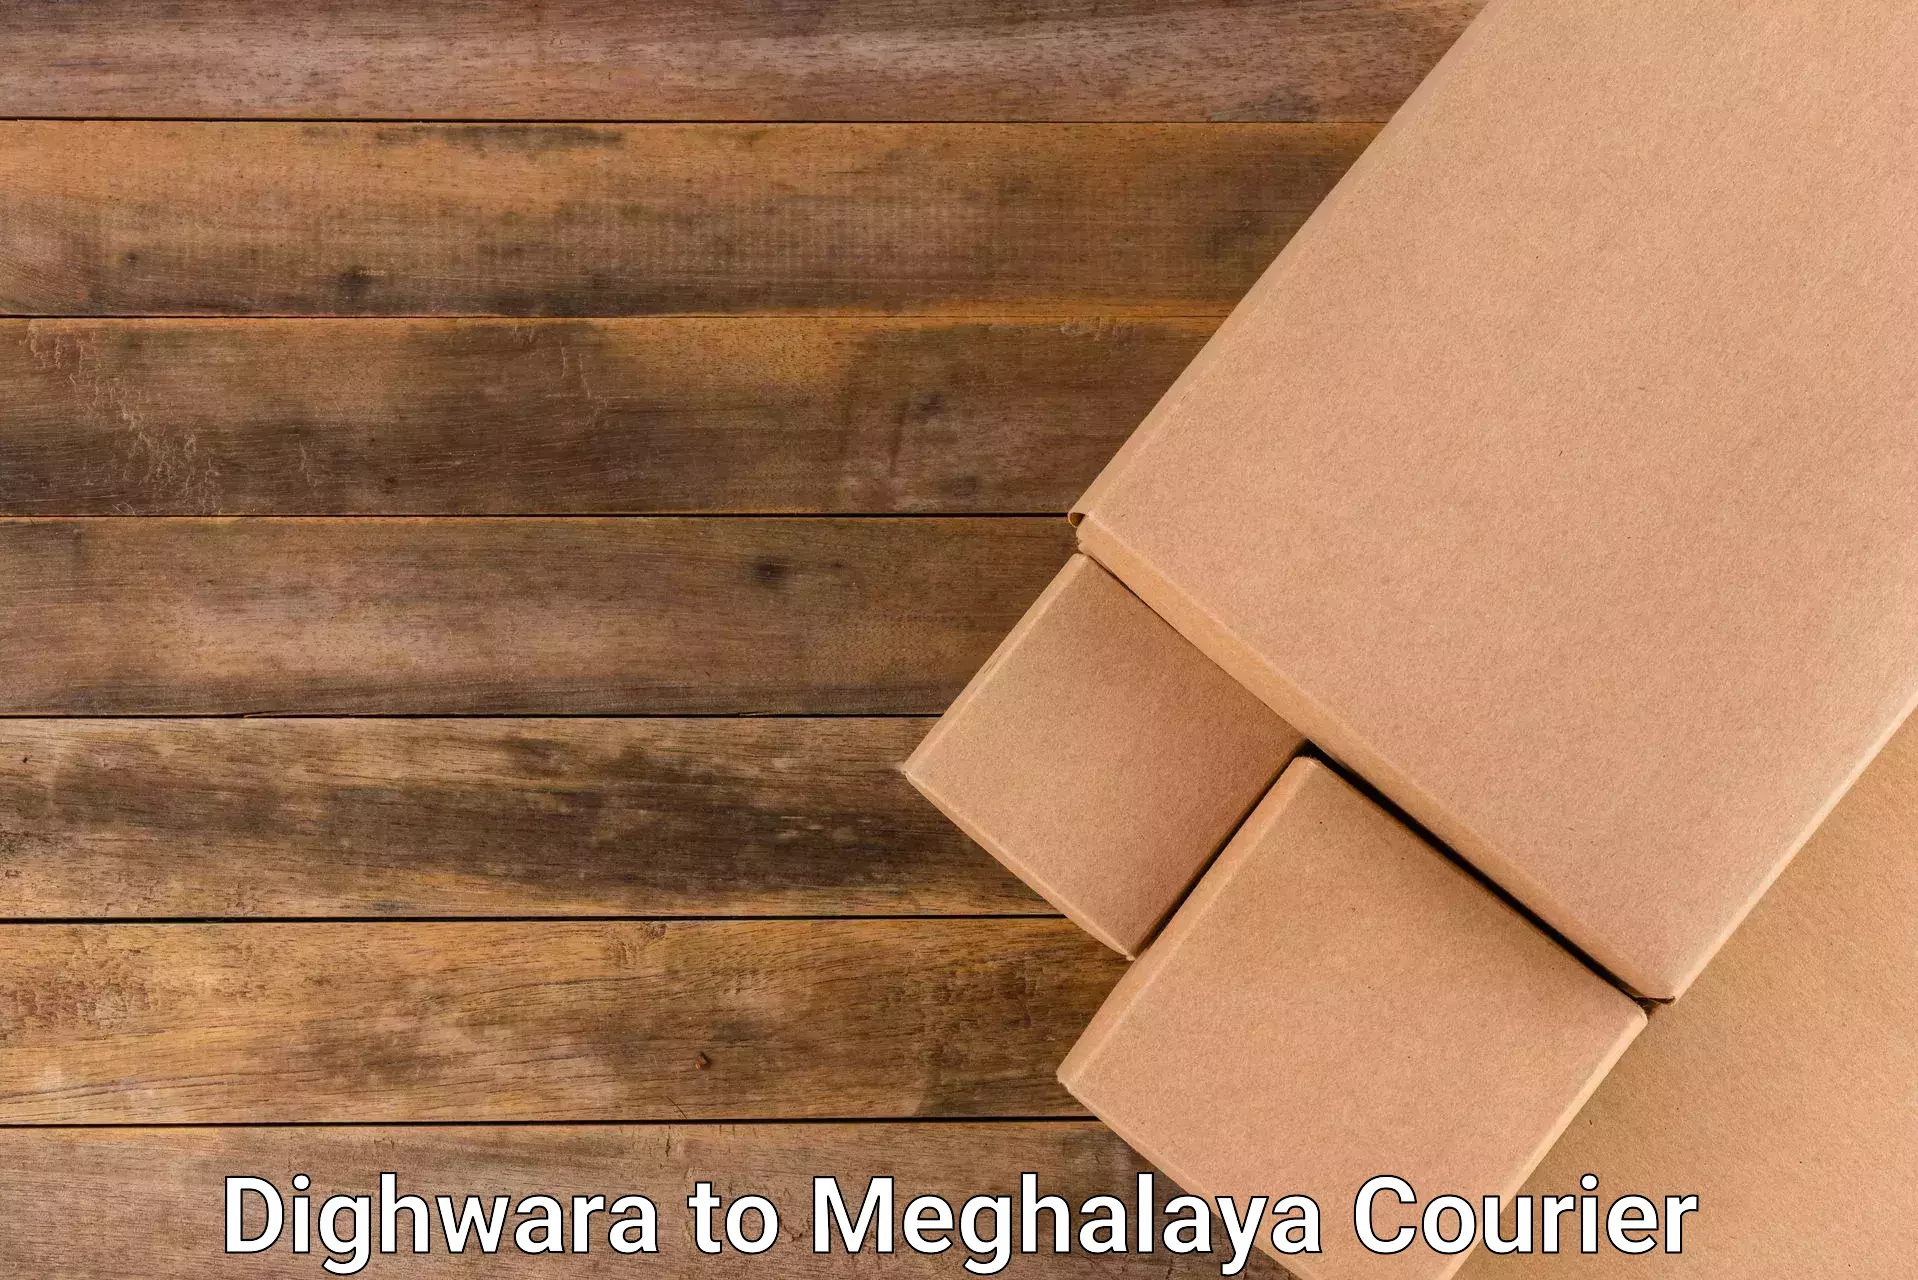 24-hour courier service Dighwara to Meghalaya